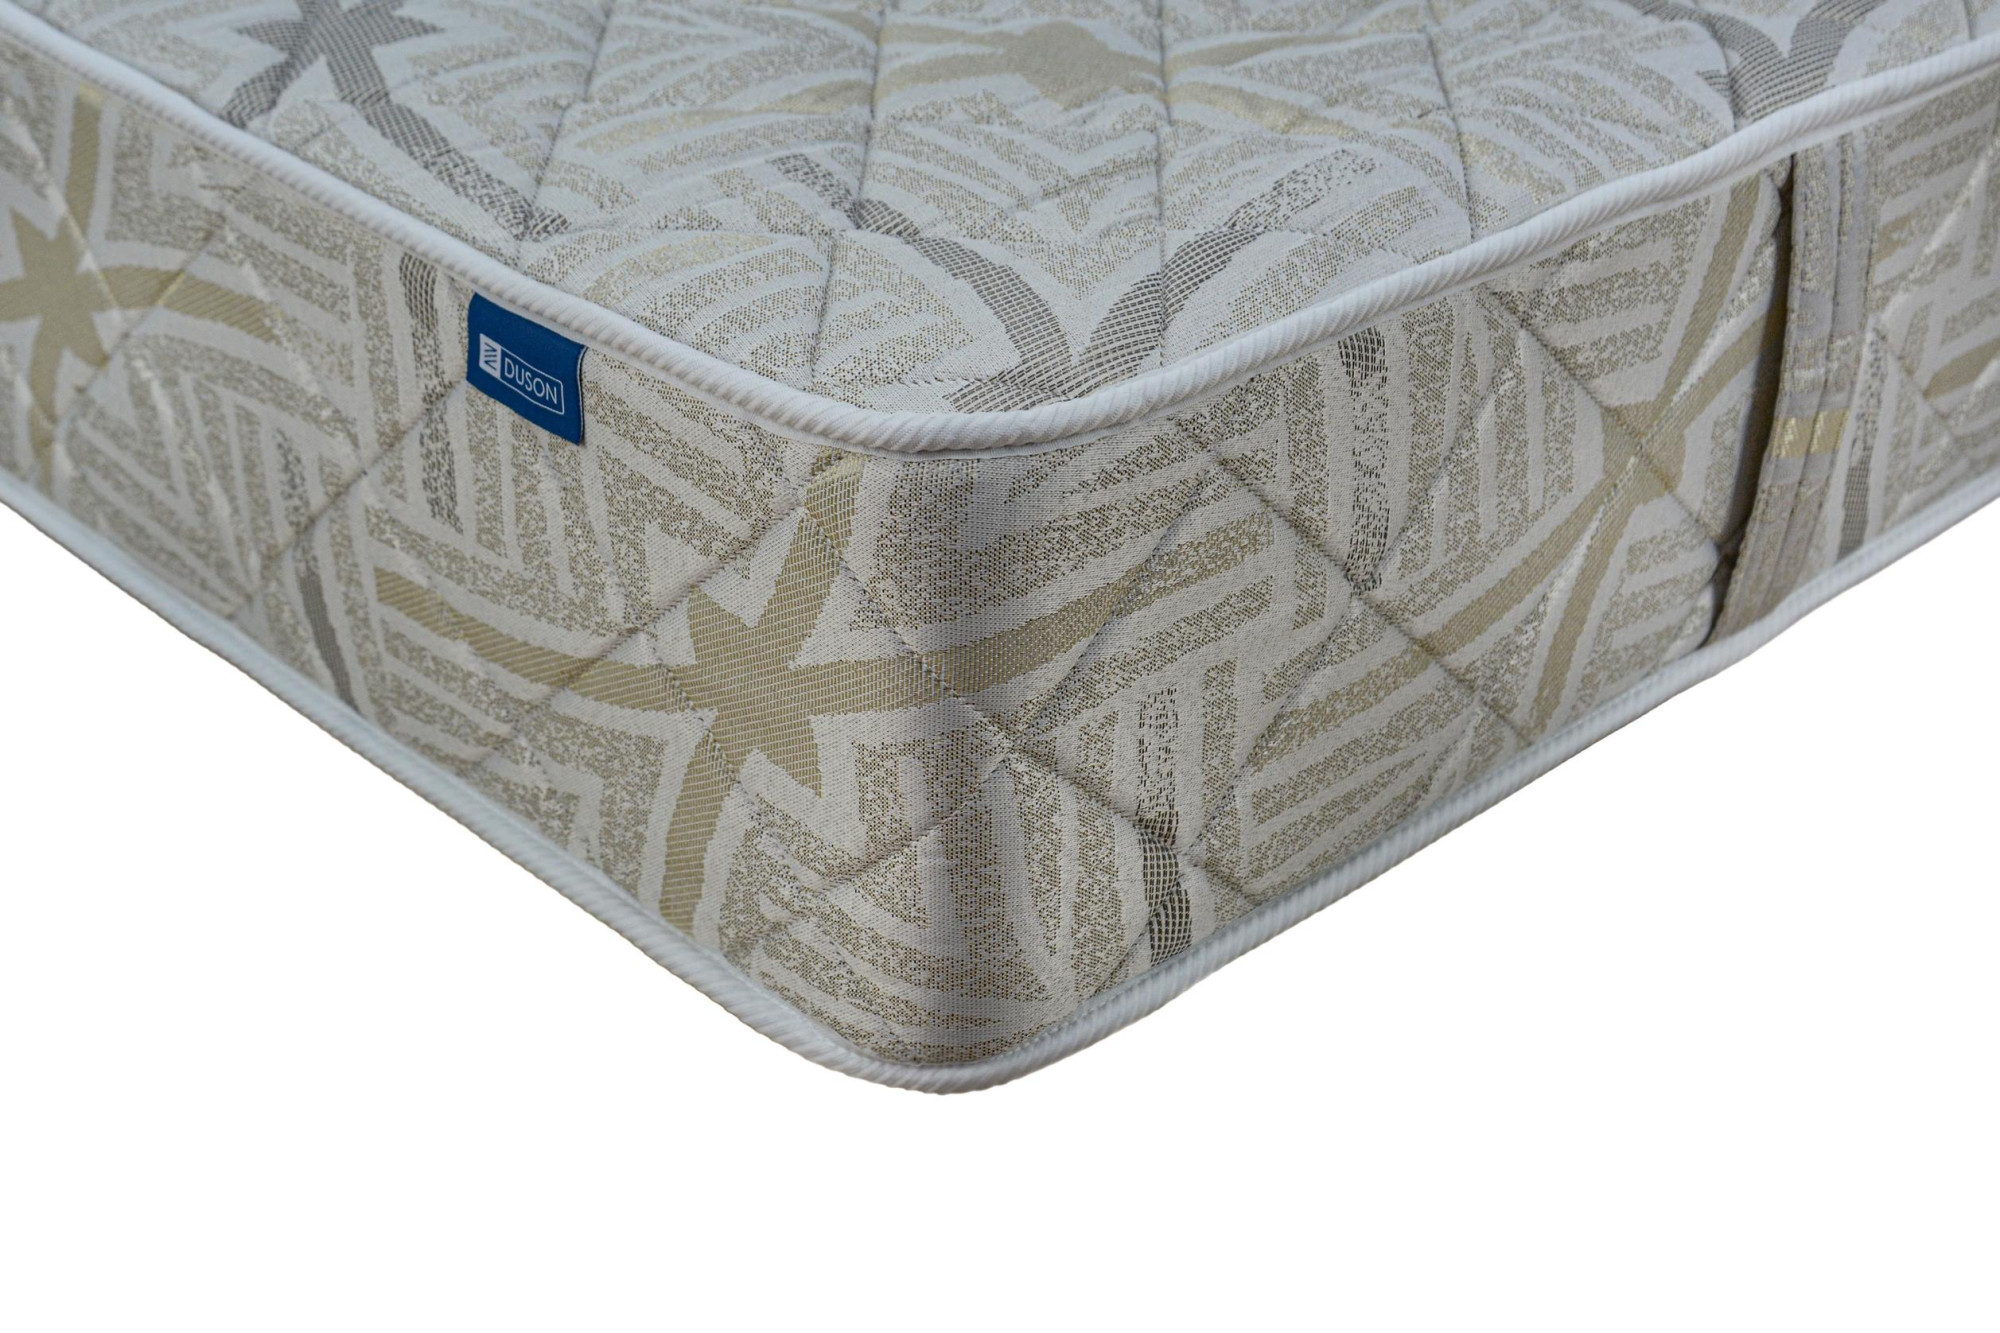 Orthopedic mattress Continental One-sided 130x190 soft, 25cm